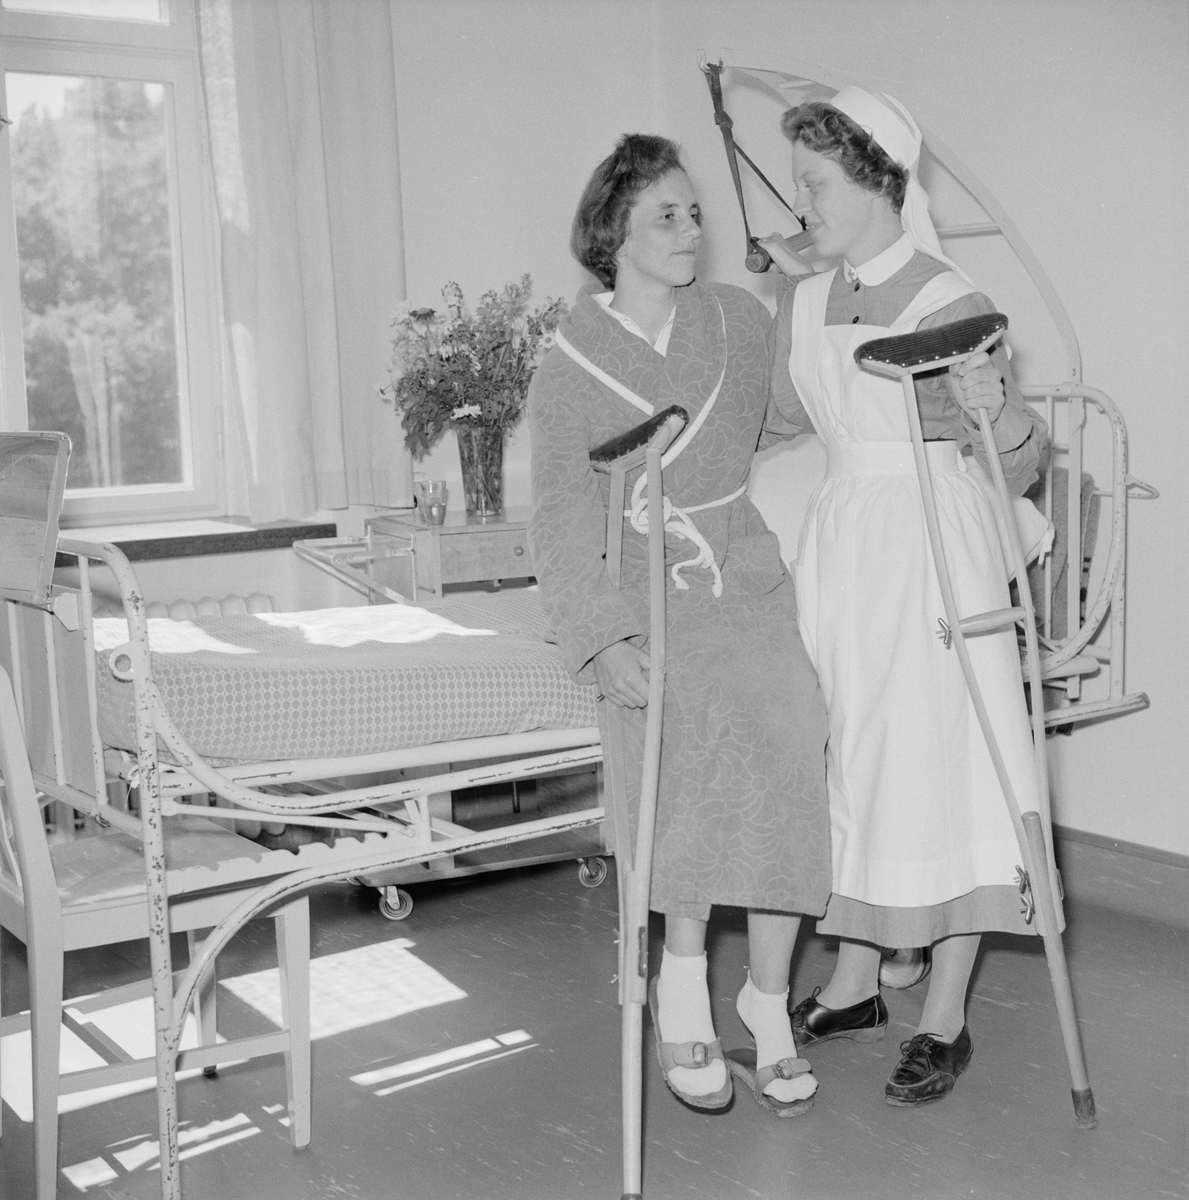 Akademiska sjukhuset, elever på sjuksköterskeskolan, Uppsala, juni 1959